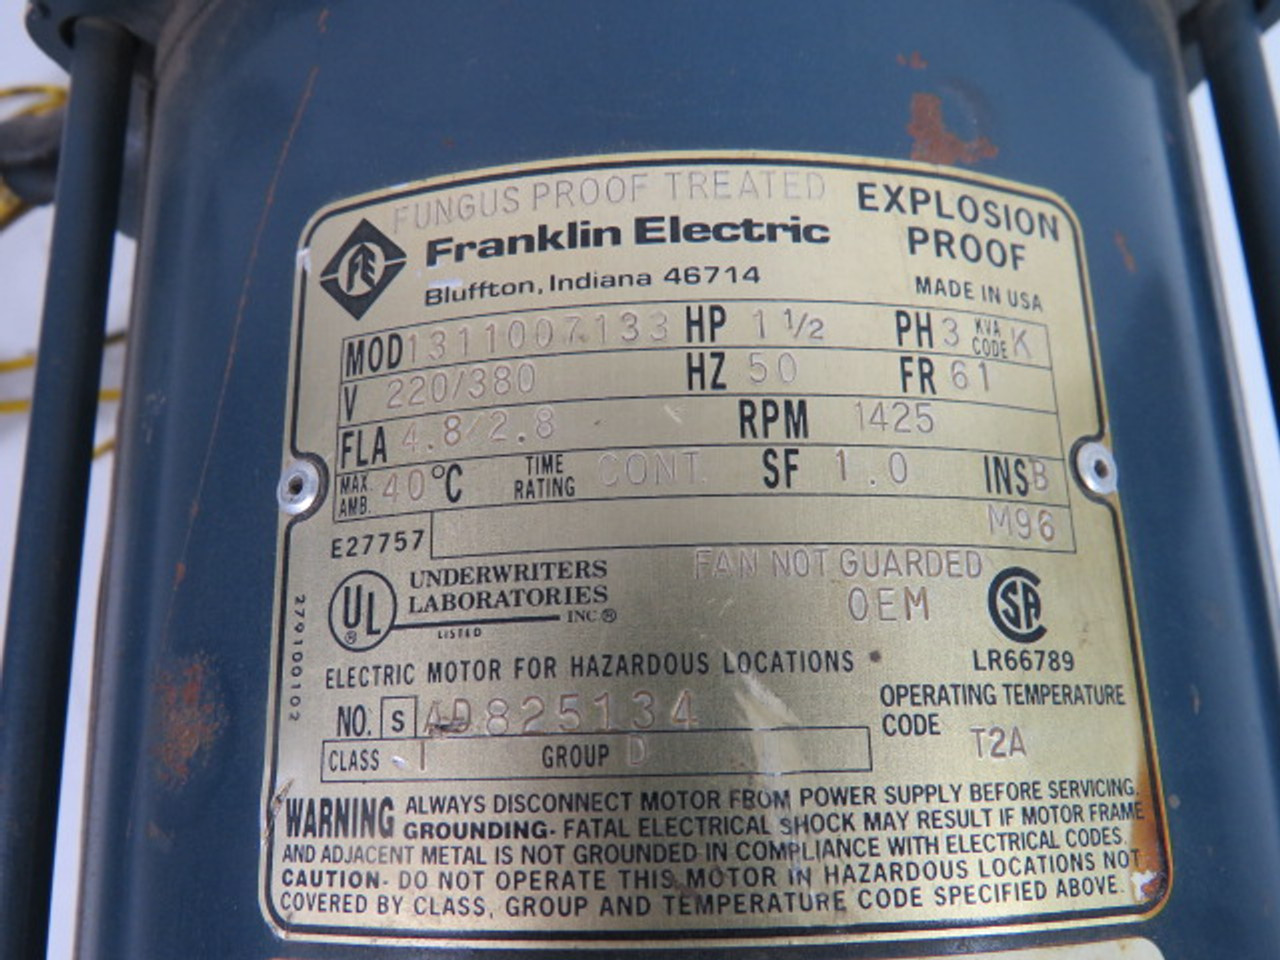 Franklin Electric 1-1/2HP 1425RPM 230/380V 61 3PH 4.8/2.8A 50Hz USED